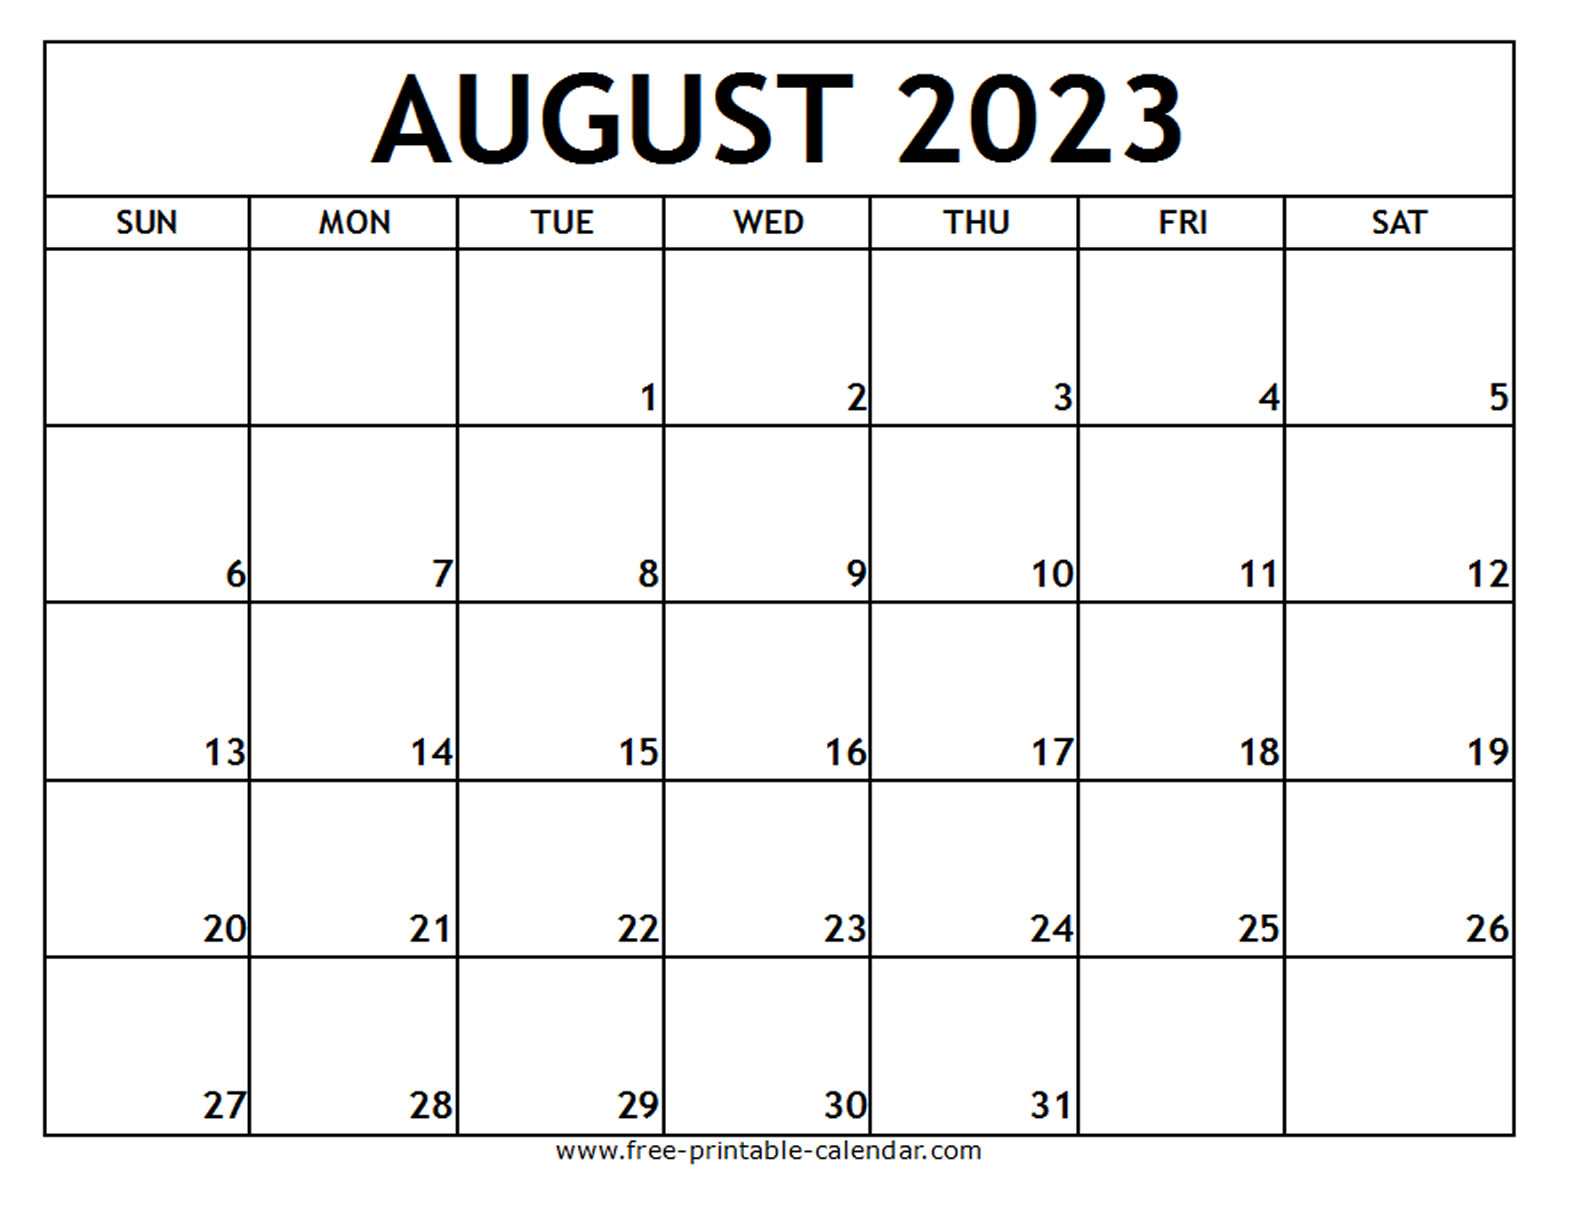 August 2023 Printable Calendar Free printable calendar